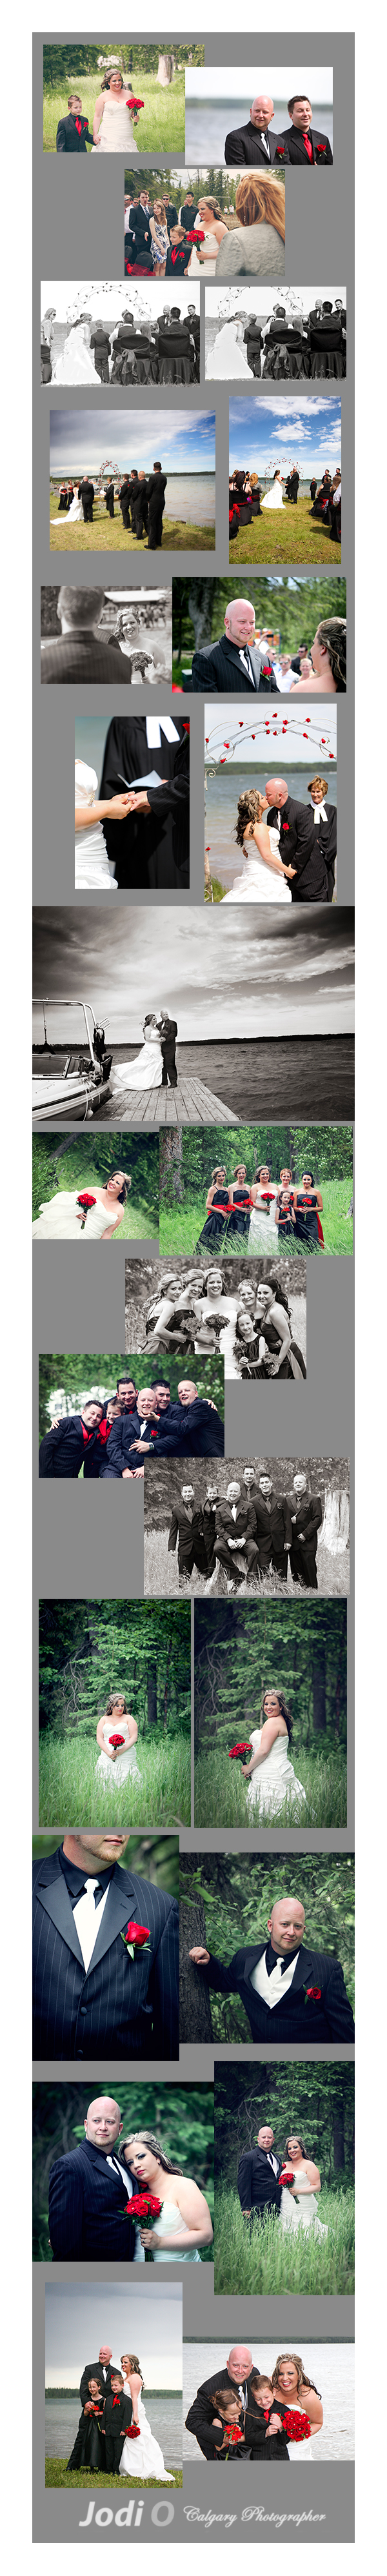 Calgary Affordable Wedding Photography, Calgary Wedding Photographer Hourly Rate, Affordable Wedding Photography (1)